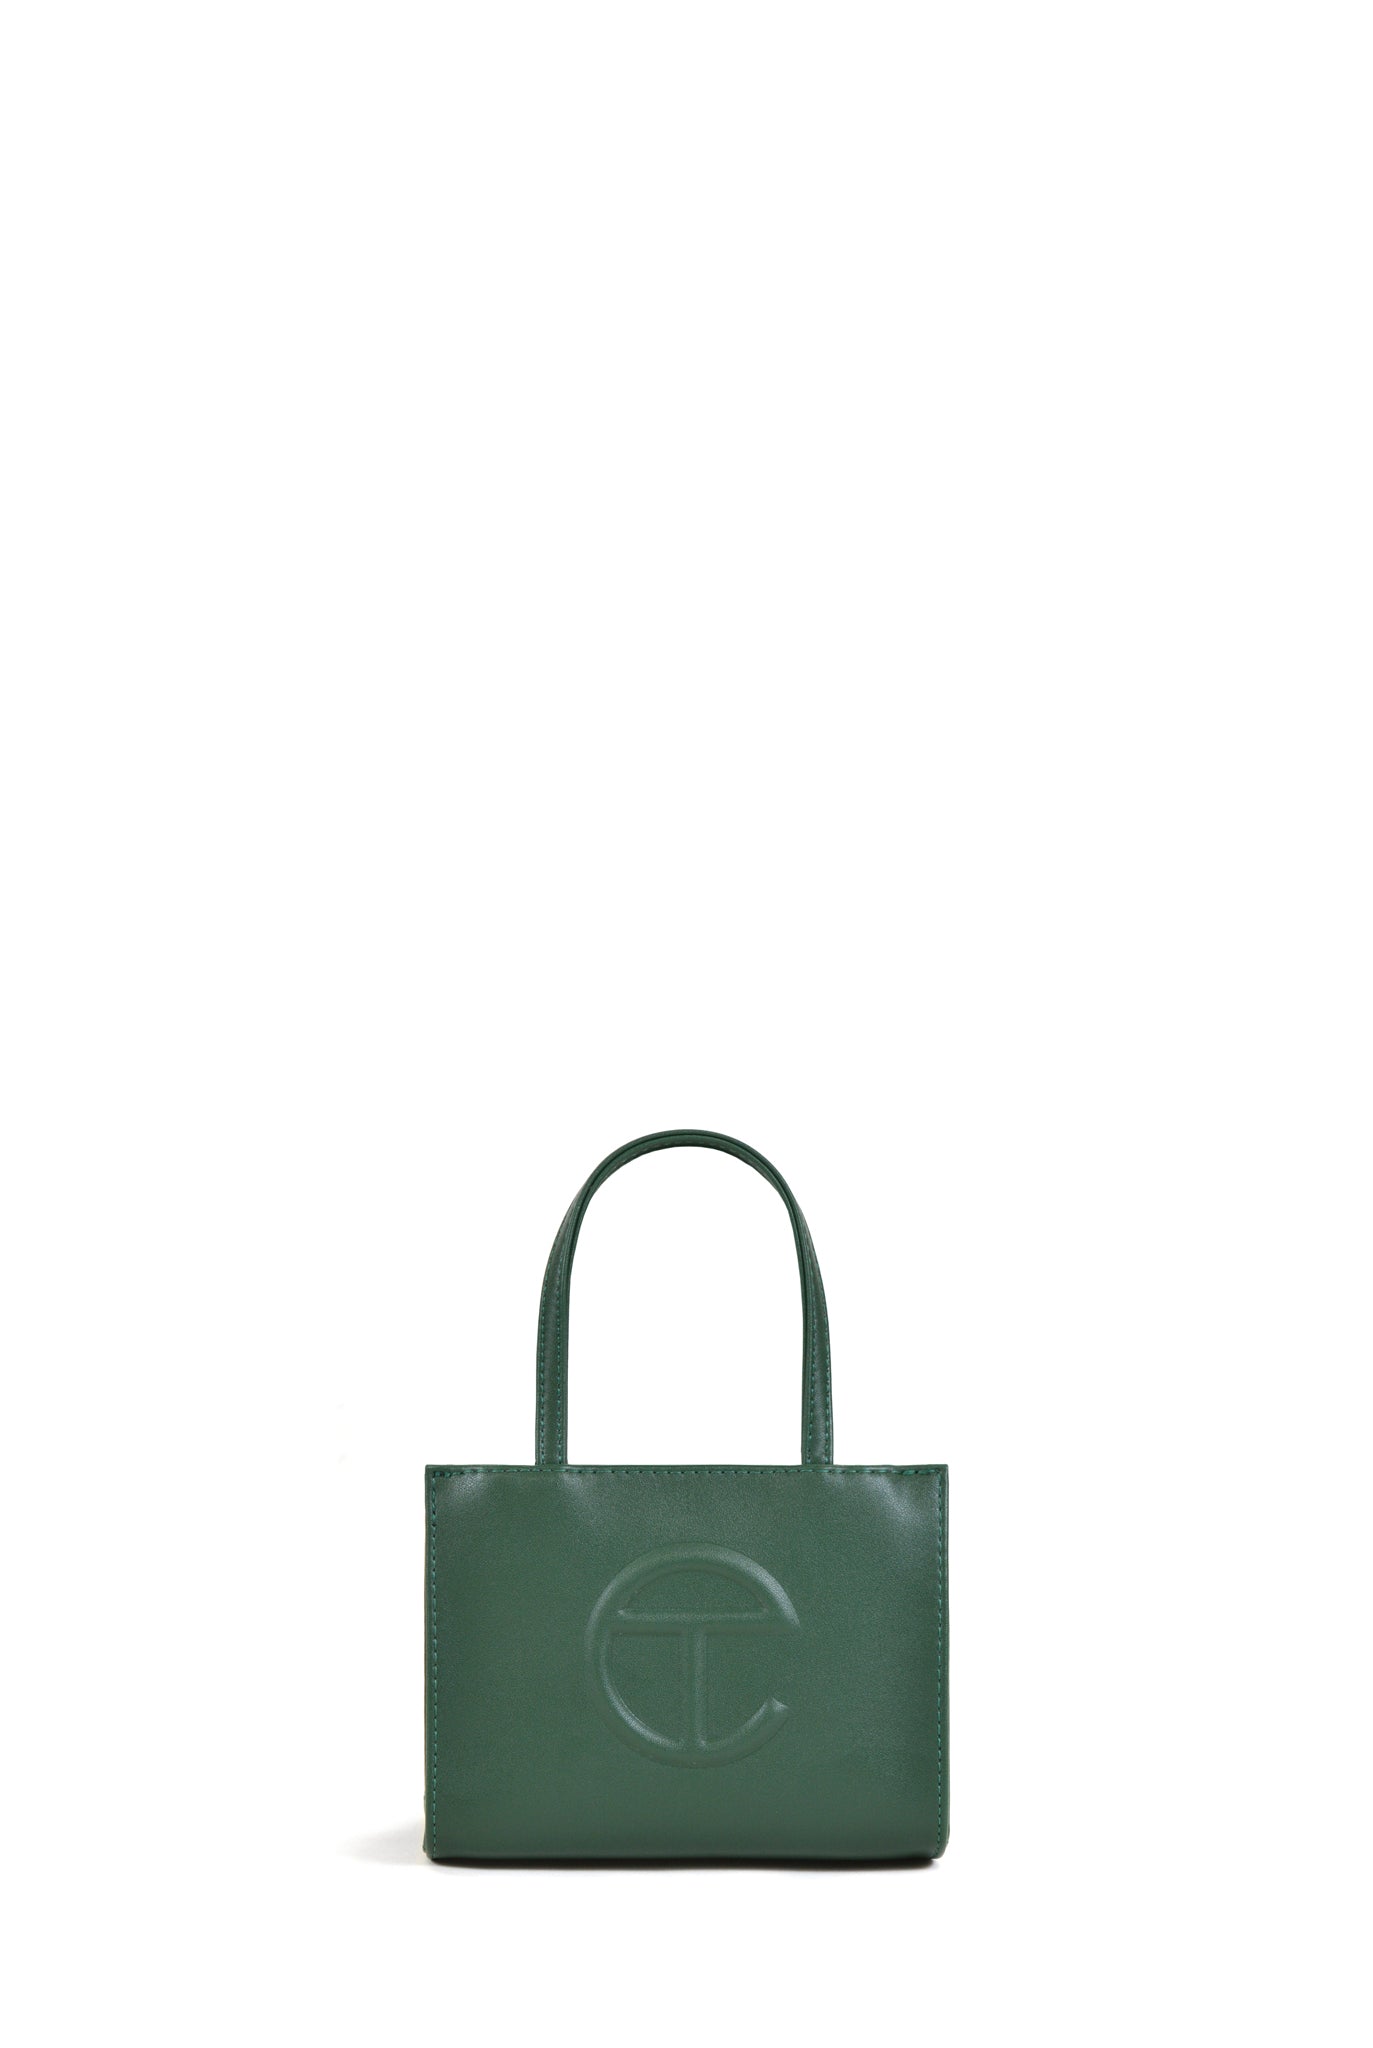 Telfar Small Shopping Bag, Dark Olive